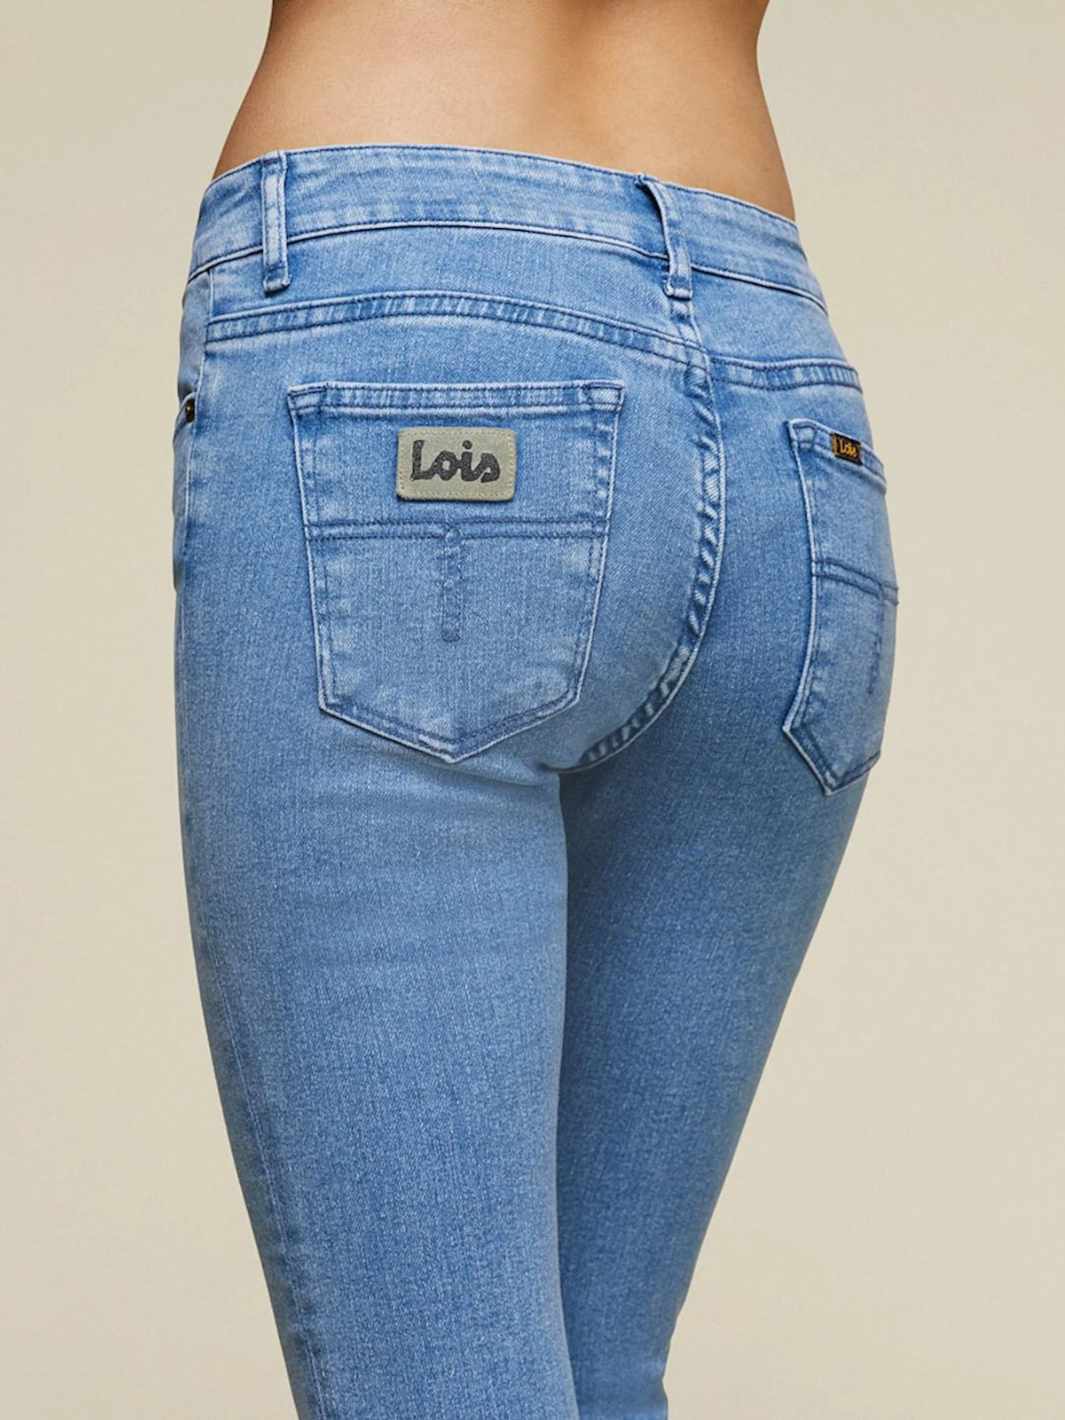 Lois Jeans Jeans | Raval Hyper Ladywash Sky Bleach